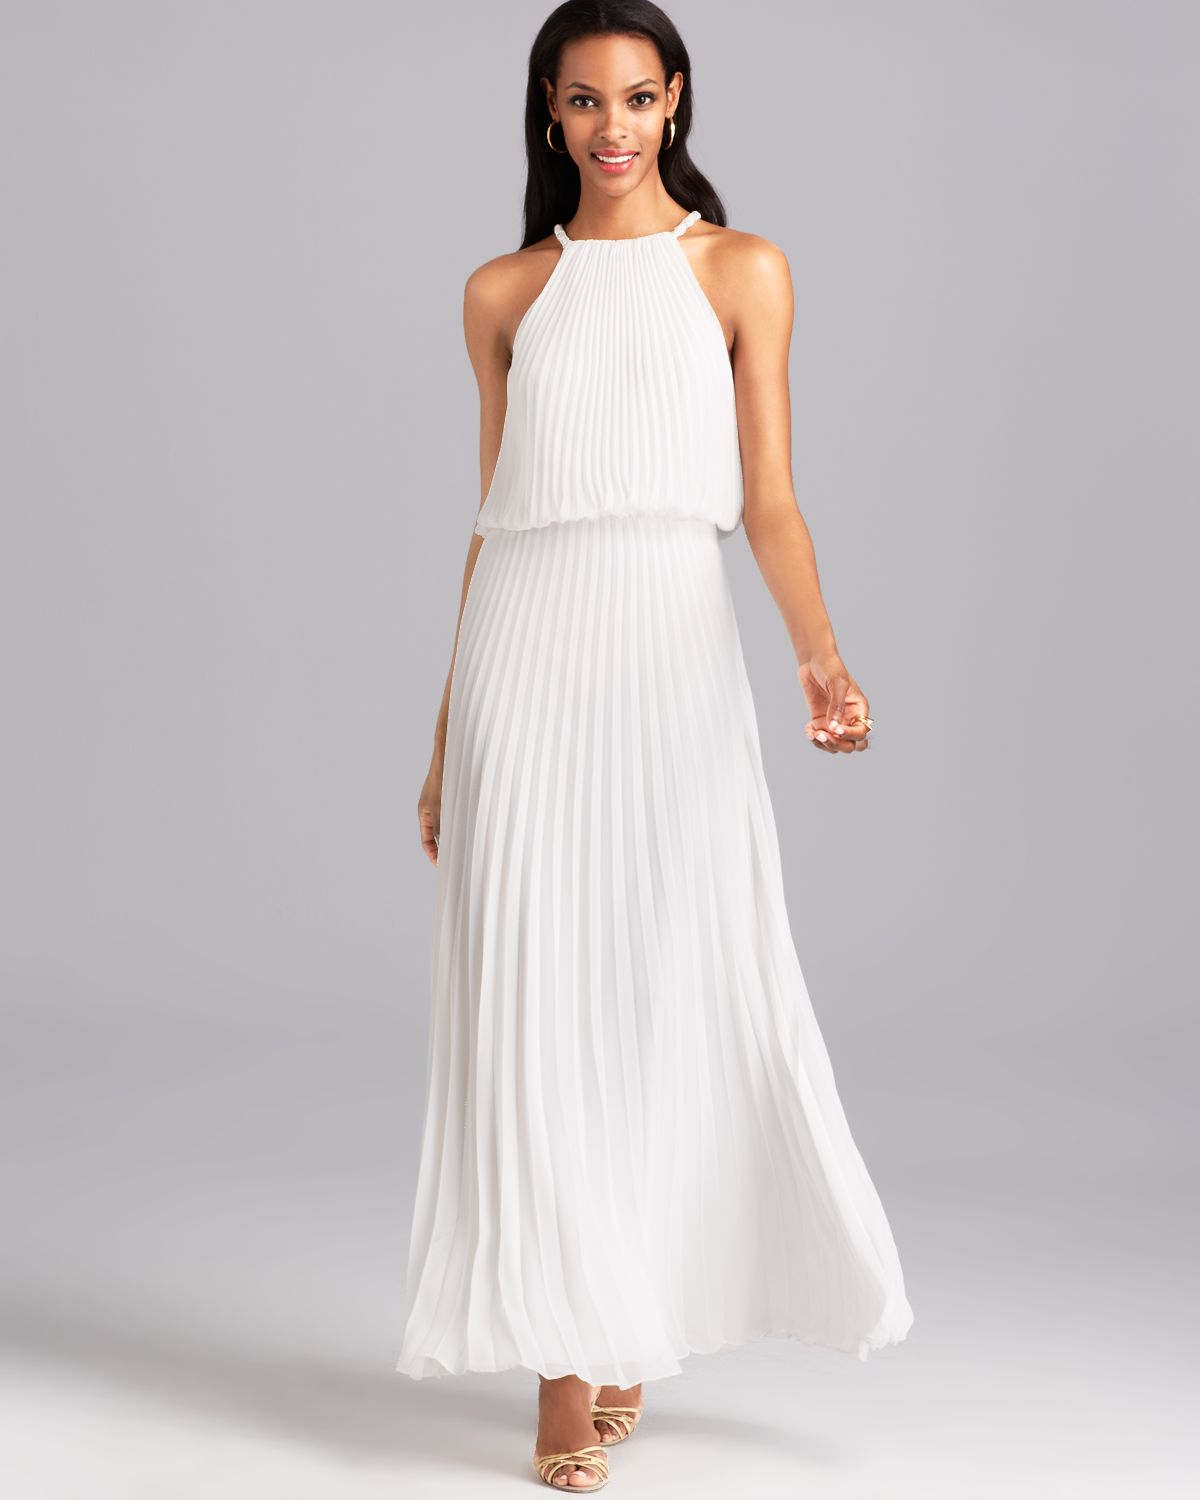 Lyst - Aqua Gown - Grecian Pleated Blouson in White